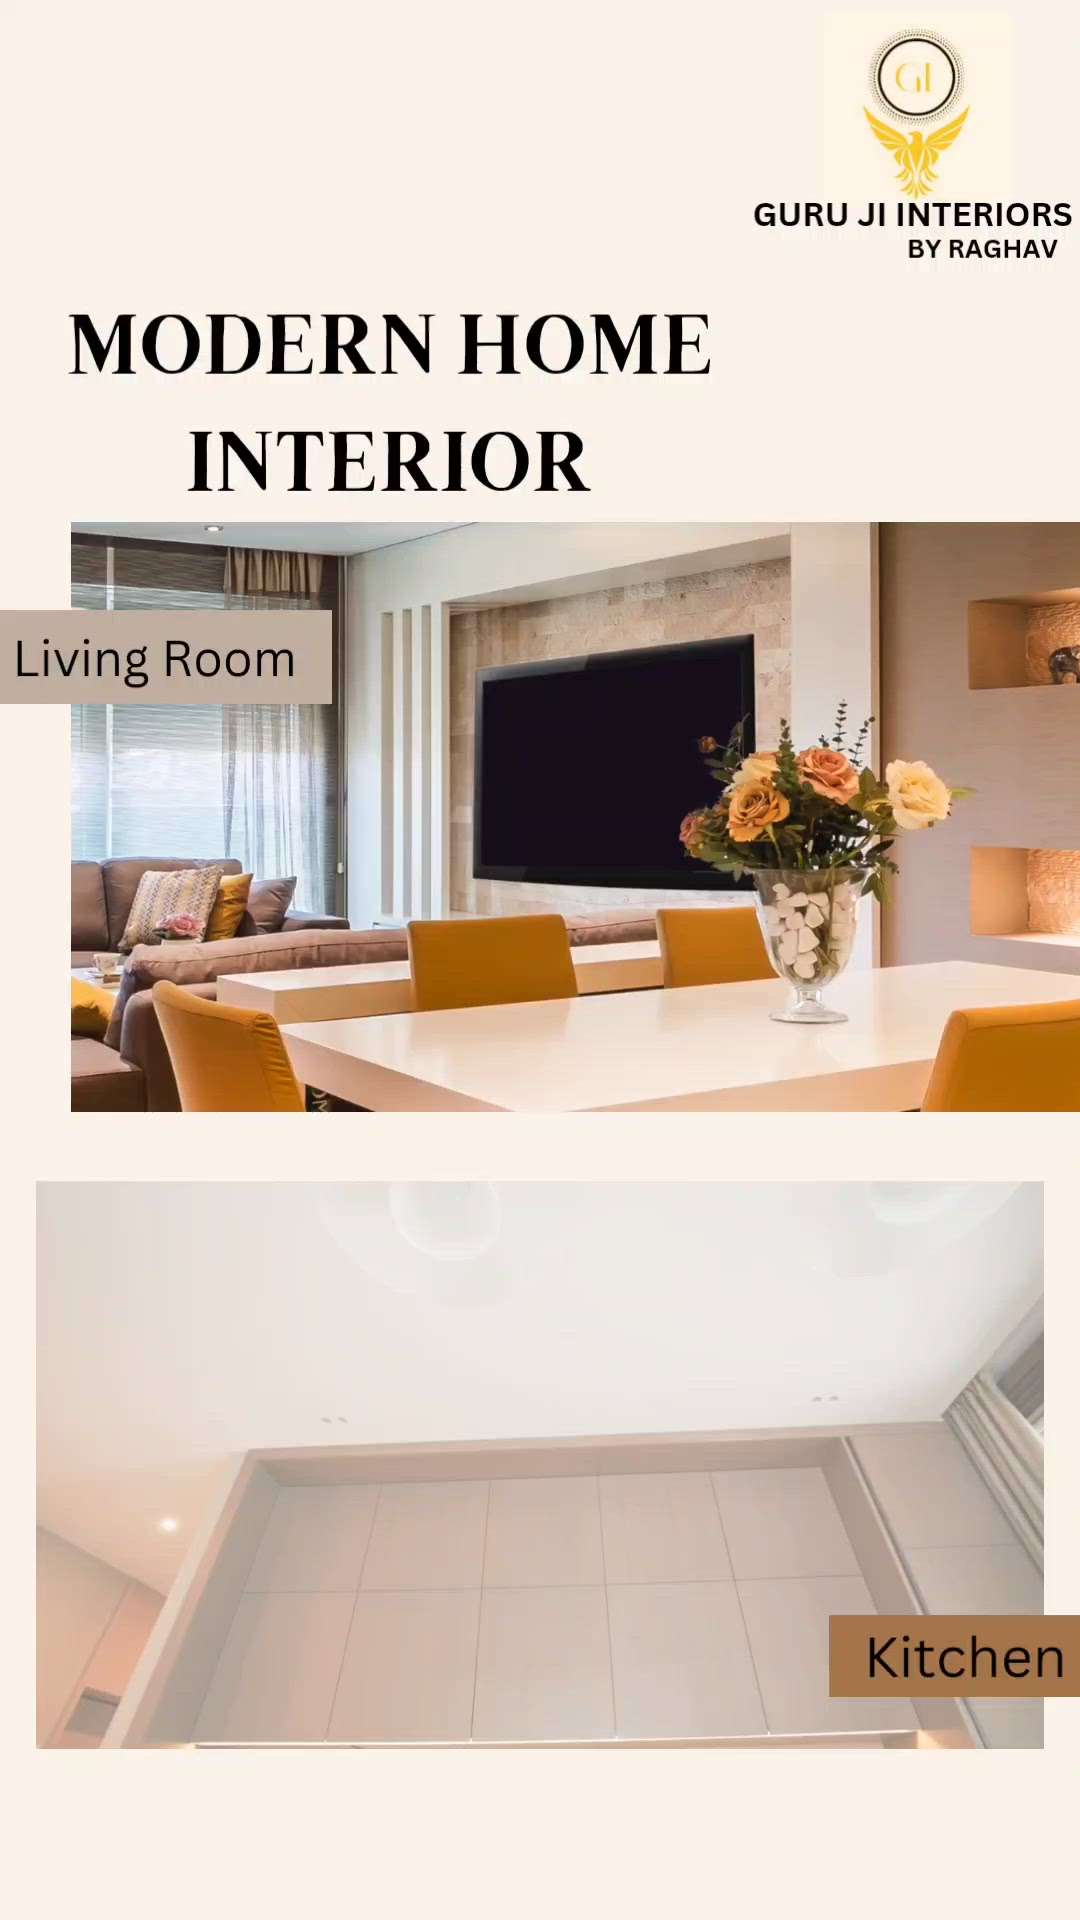 @ Looking for interior Designers?
Get Lowest price &  best quality home interiors 💫
👉🏻 Modern home interior design 
.
Guru ji interiors
By Raghav
Call - 9870533947 
#gurujiinteriors
#Interiordesign #luxuryhomes
#PerfectInterior #homedecore